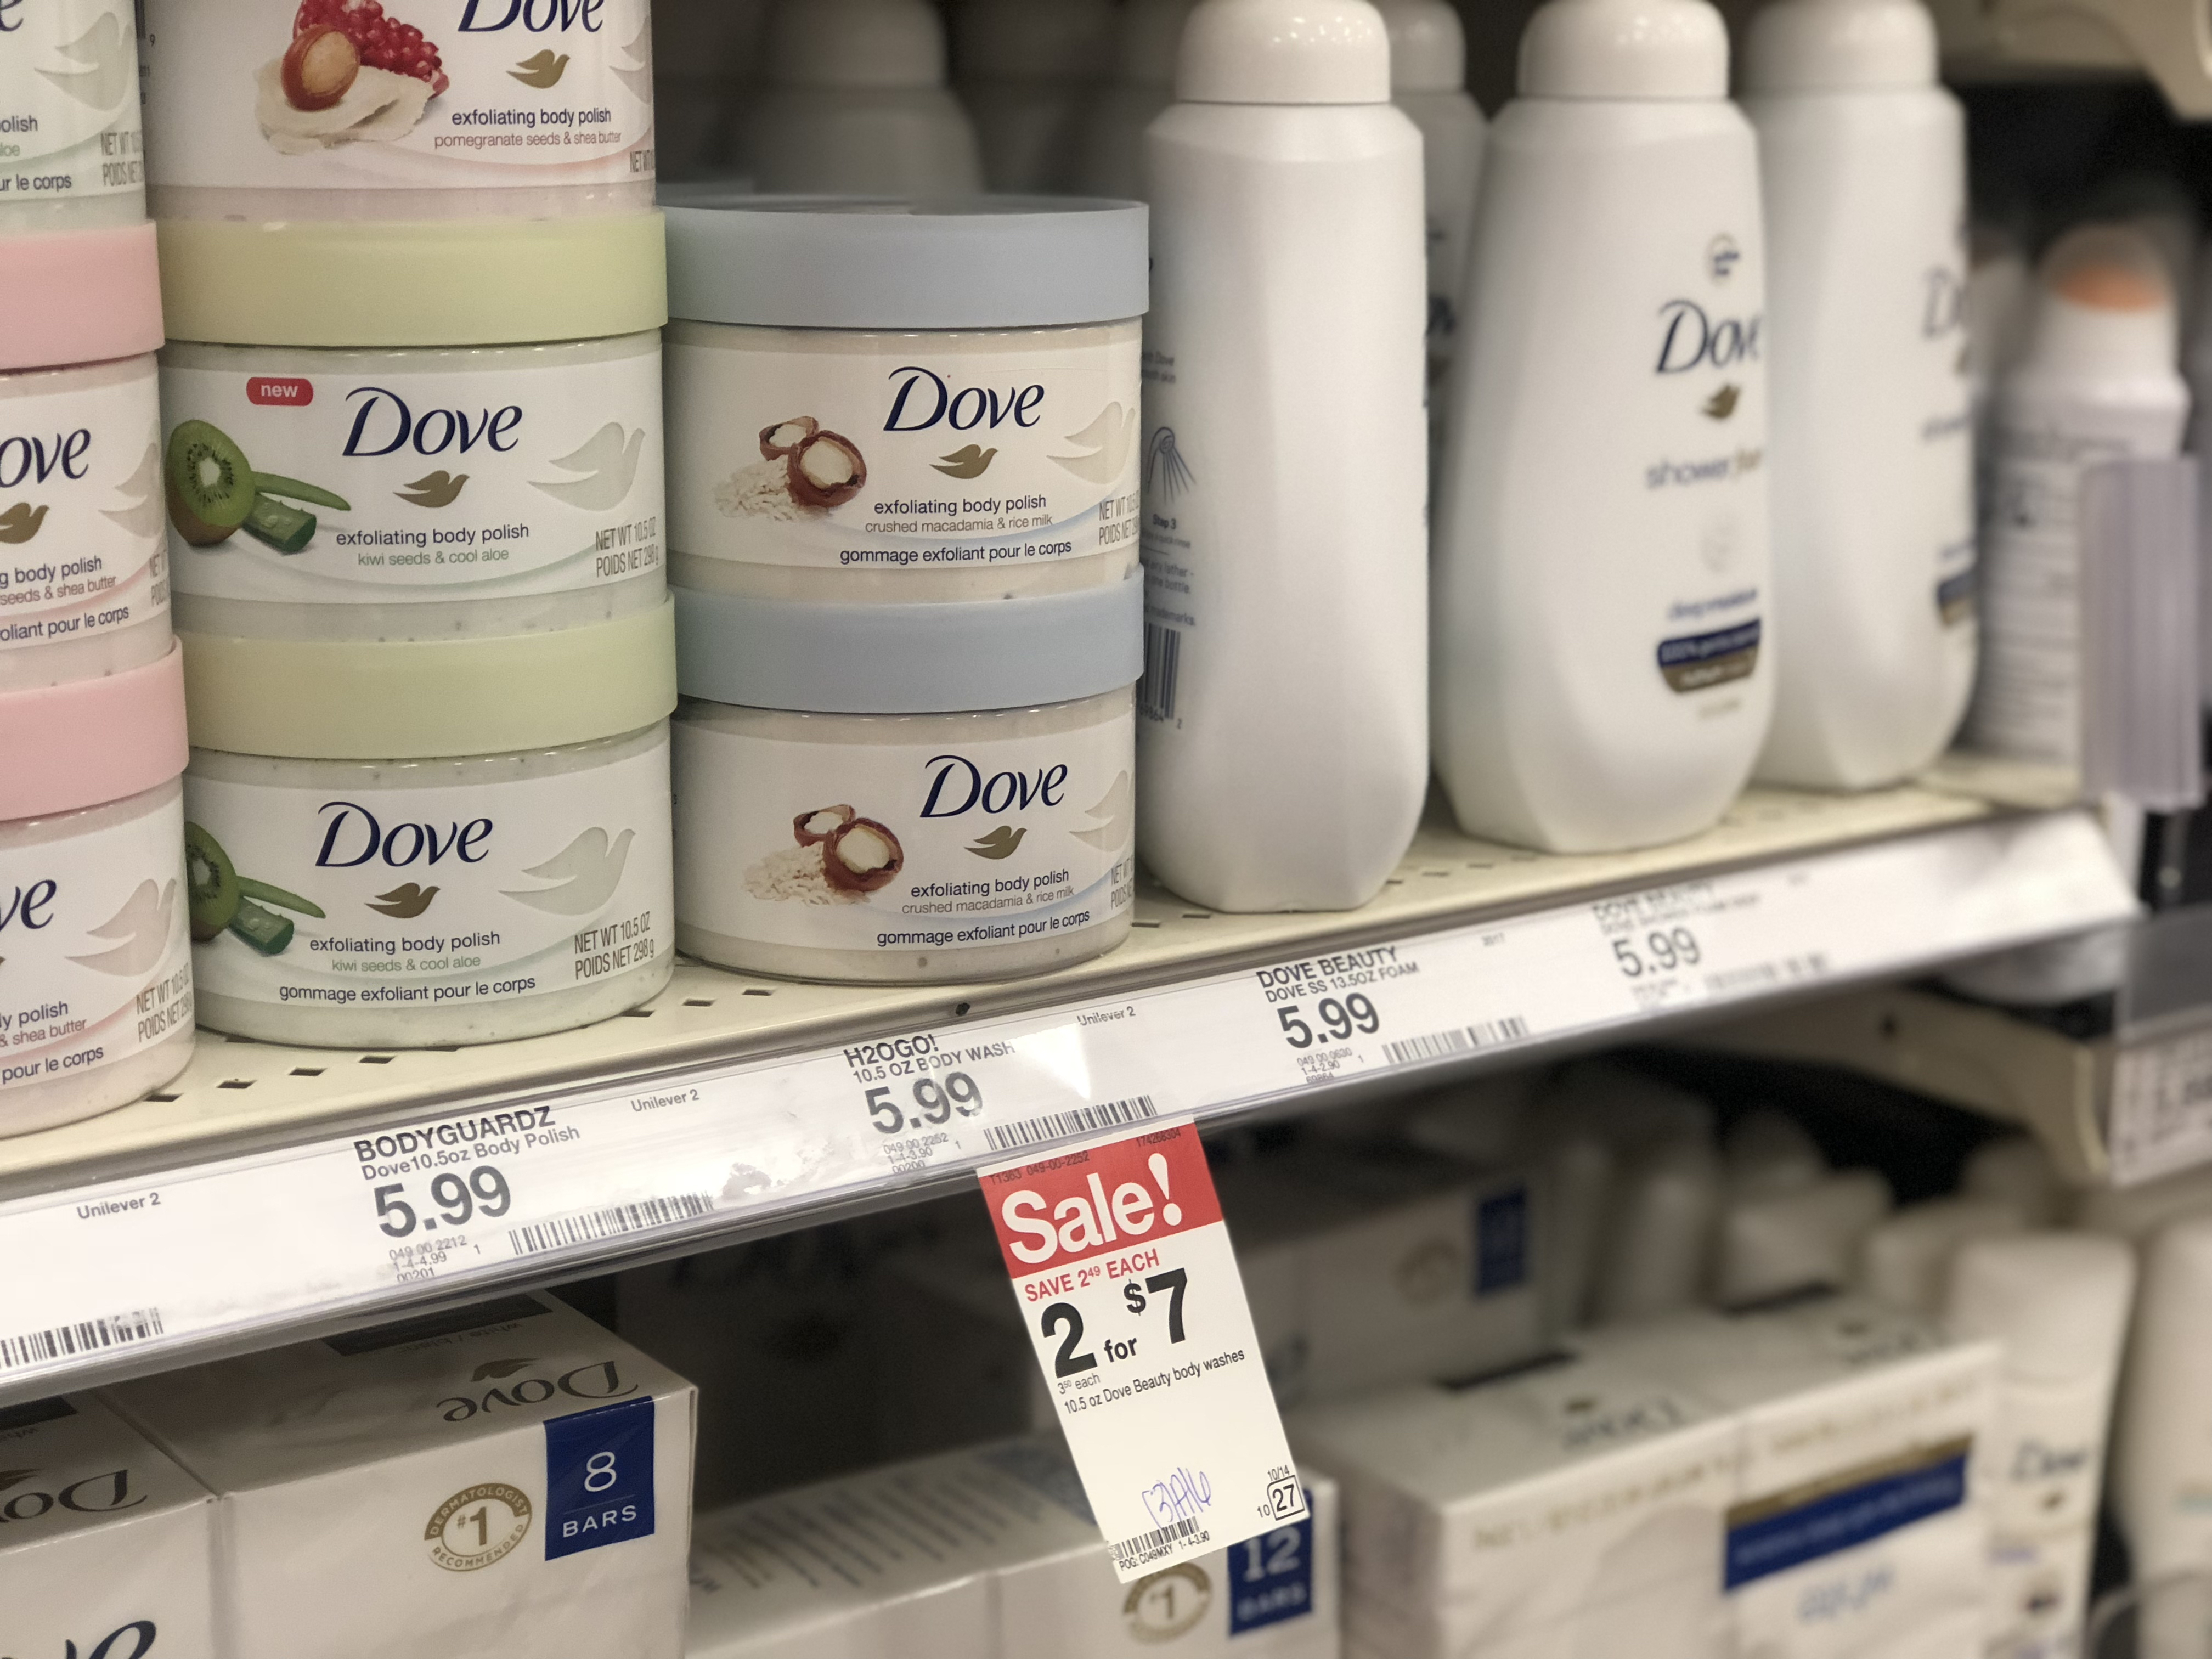 target & walgreens deals, coupons, & freebies 10-17-2018 – Dove exfoliating body polish at Target